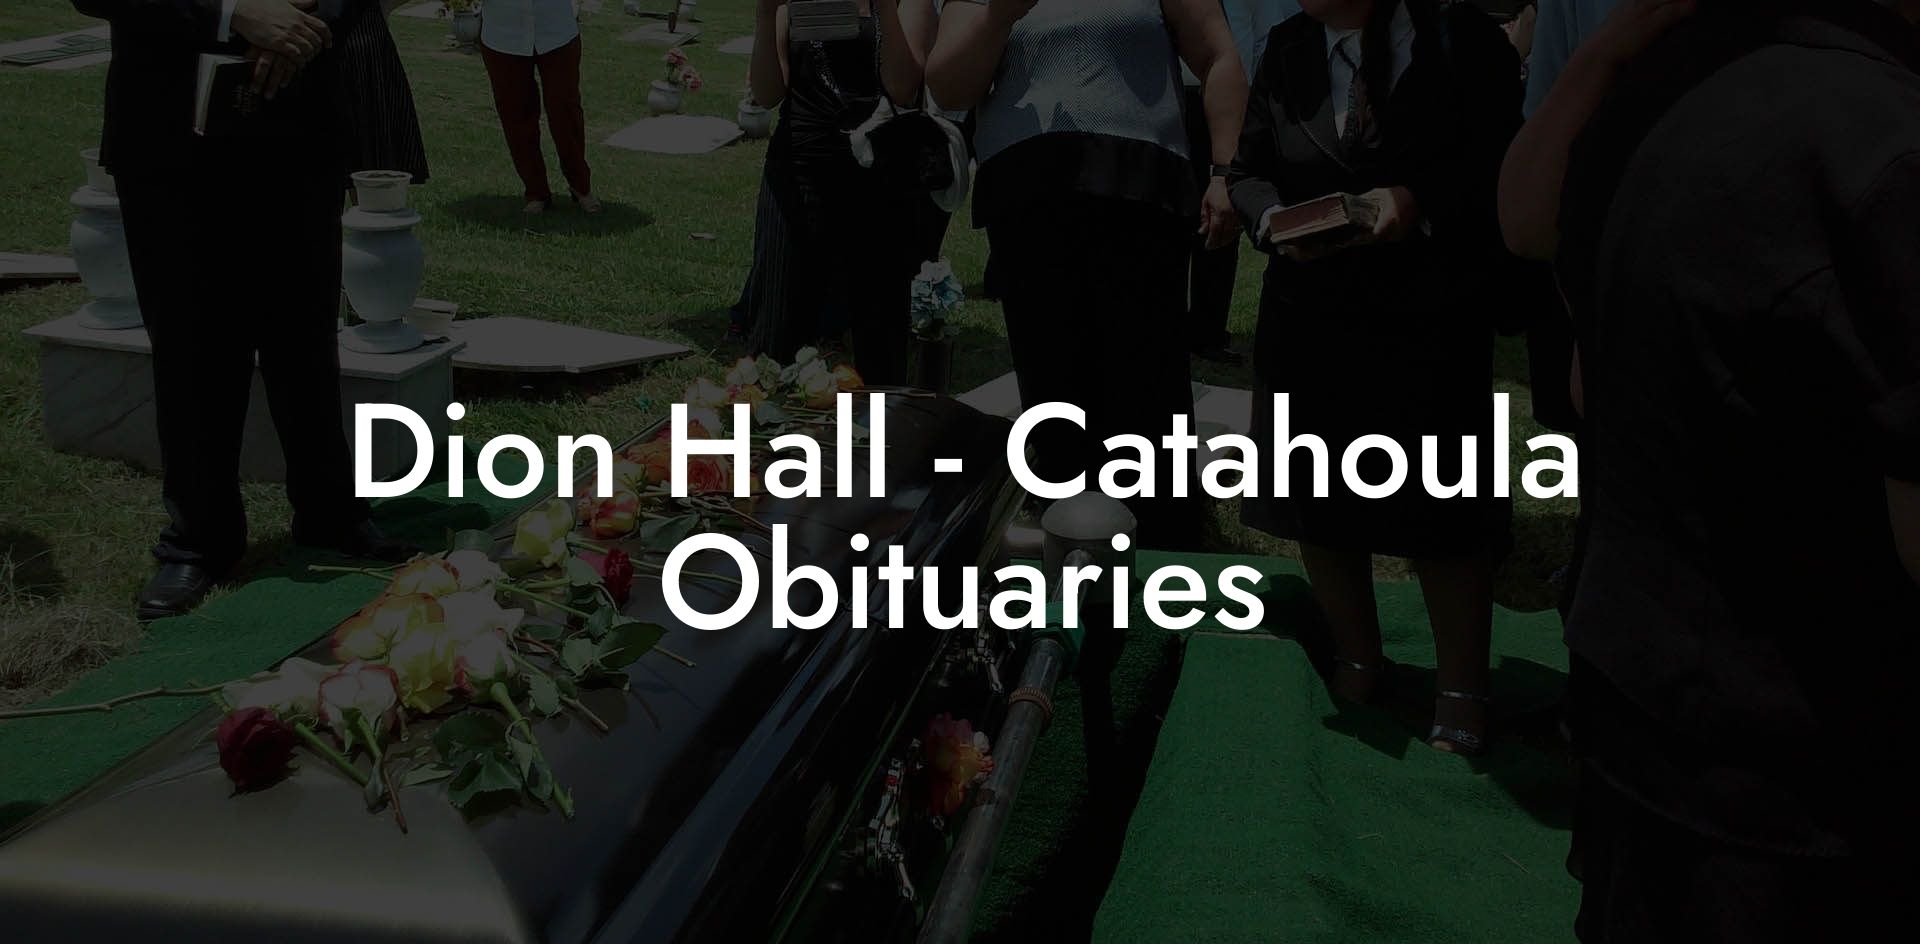 Dion Hall - Catahoula Obituaries